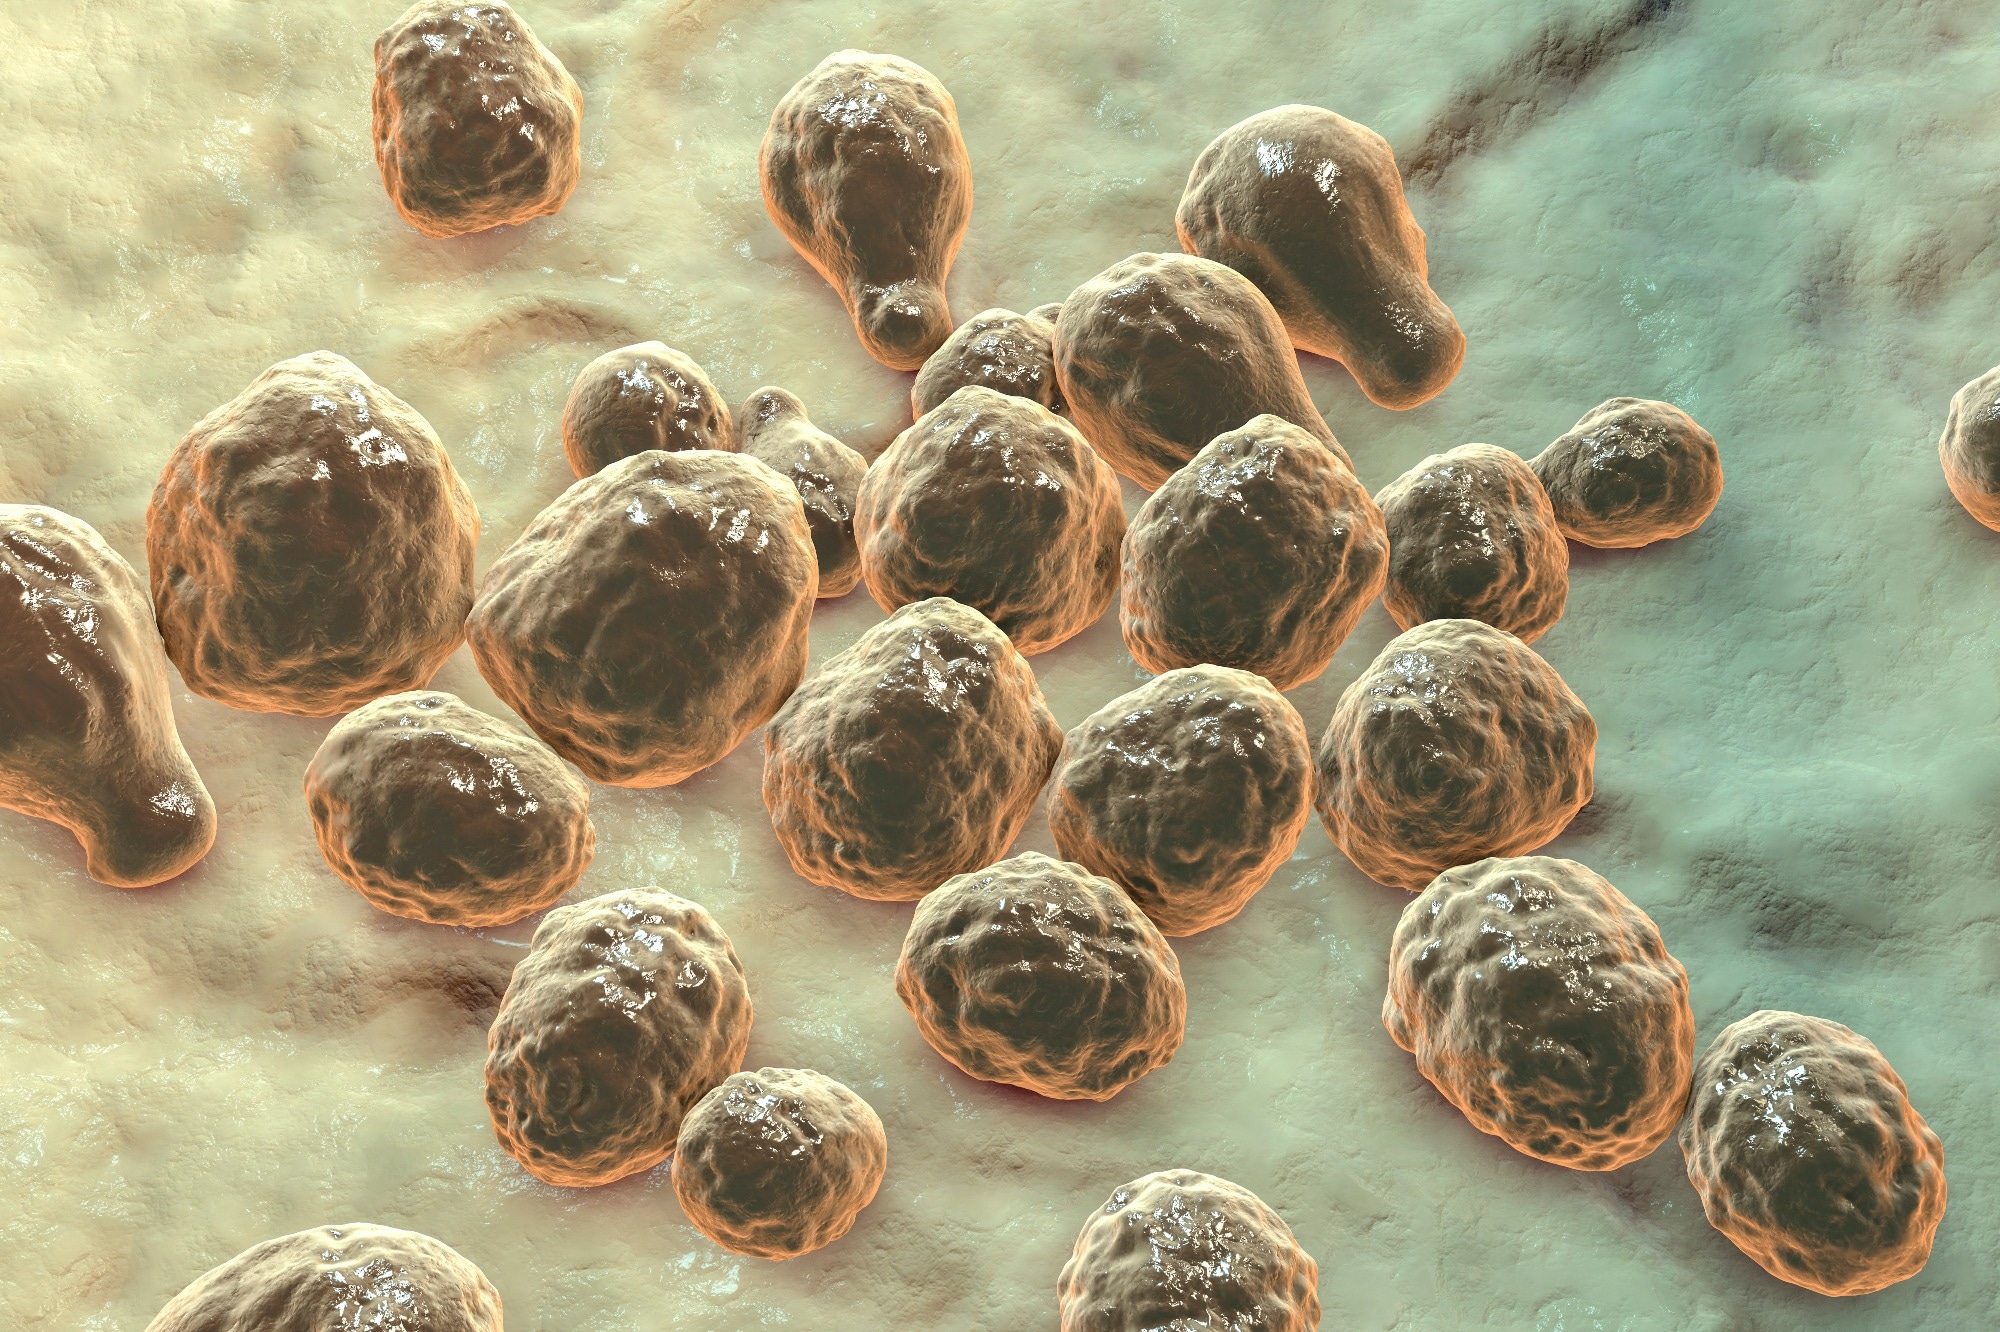 Study: Brain glucose induces tolerance of Cryptococcus neoformans to amphotericin B during meningitis. Image Credit: Kateryna Kon/Shutterstock.com